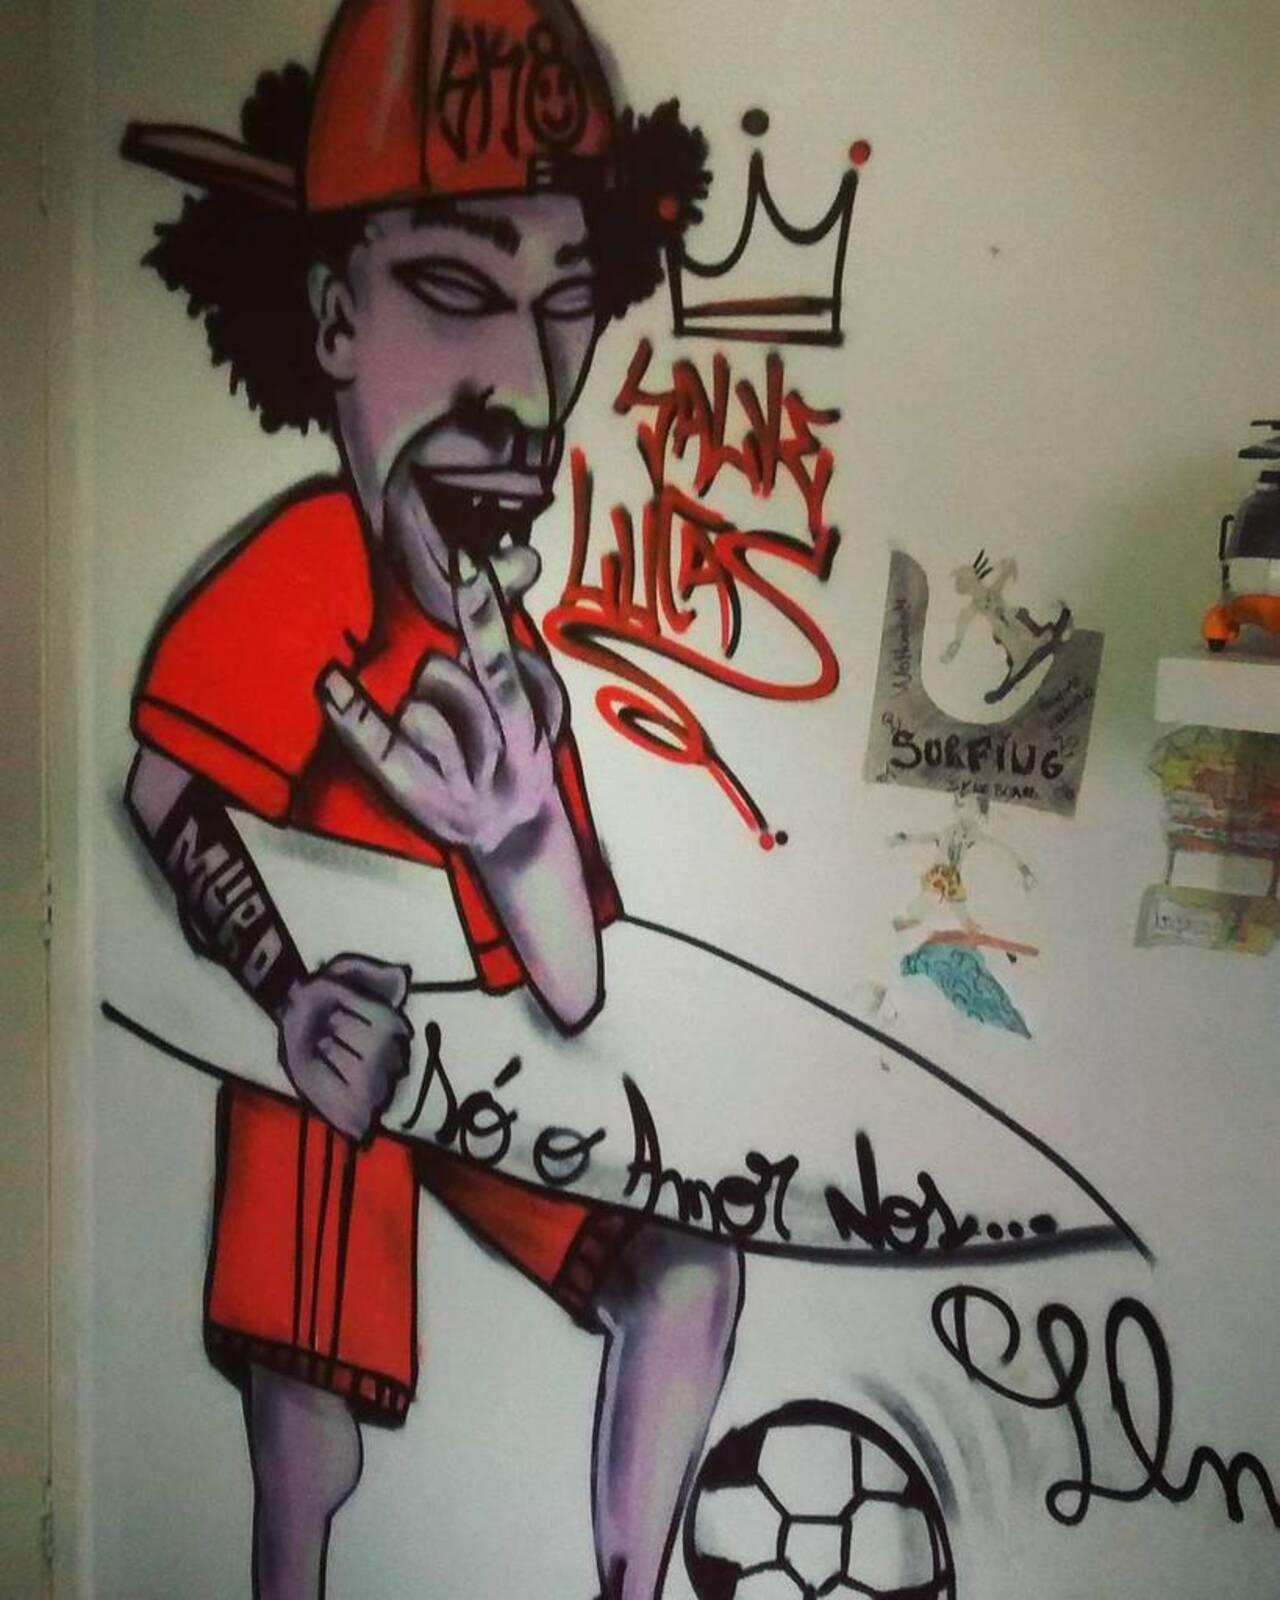 RT @artpushr: via #muromestrecerimonial "http://ift.tt/1OYTR1g" #graffiti #streetart http://t.co/S4JC4aV9NI